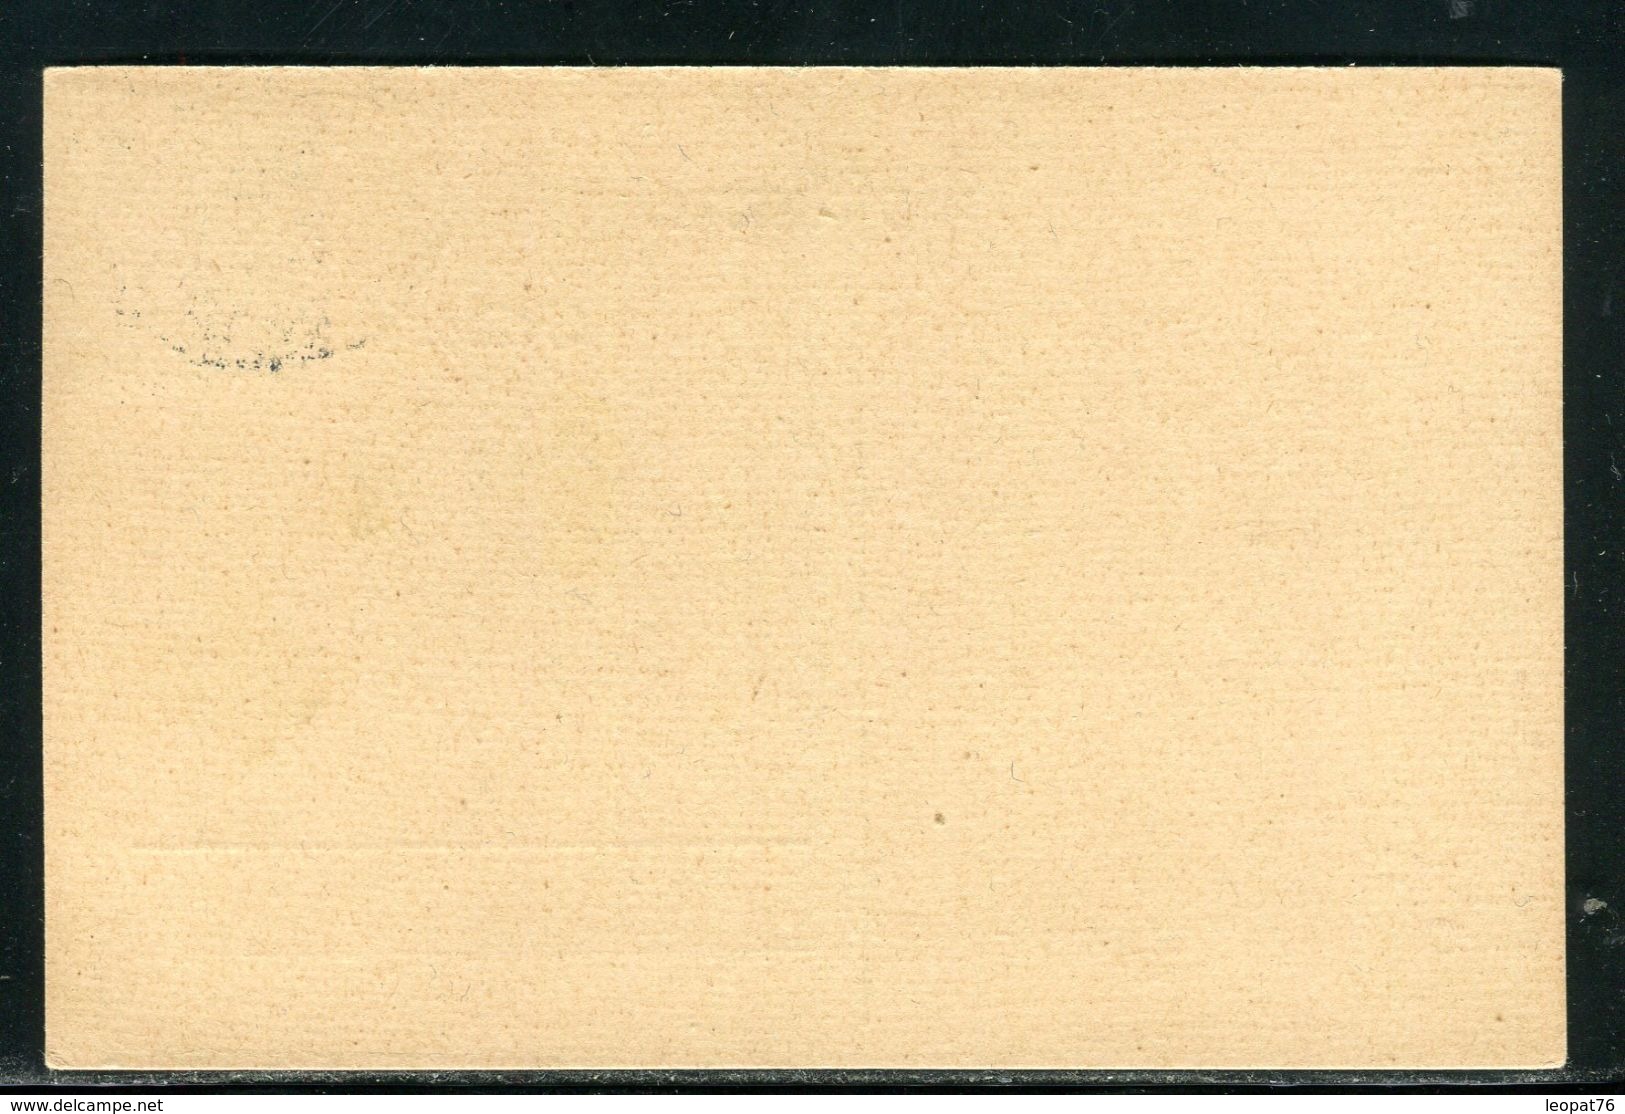 Belgique - Oblitération Du 52 Res. Inf. Div. En 1915 Sur Carte Postale - Ref D251 - Armée Allemande